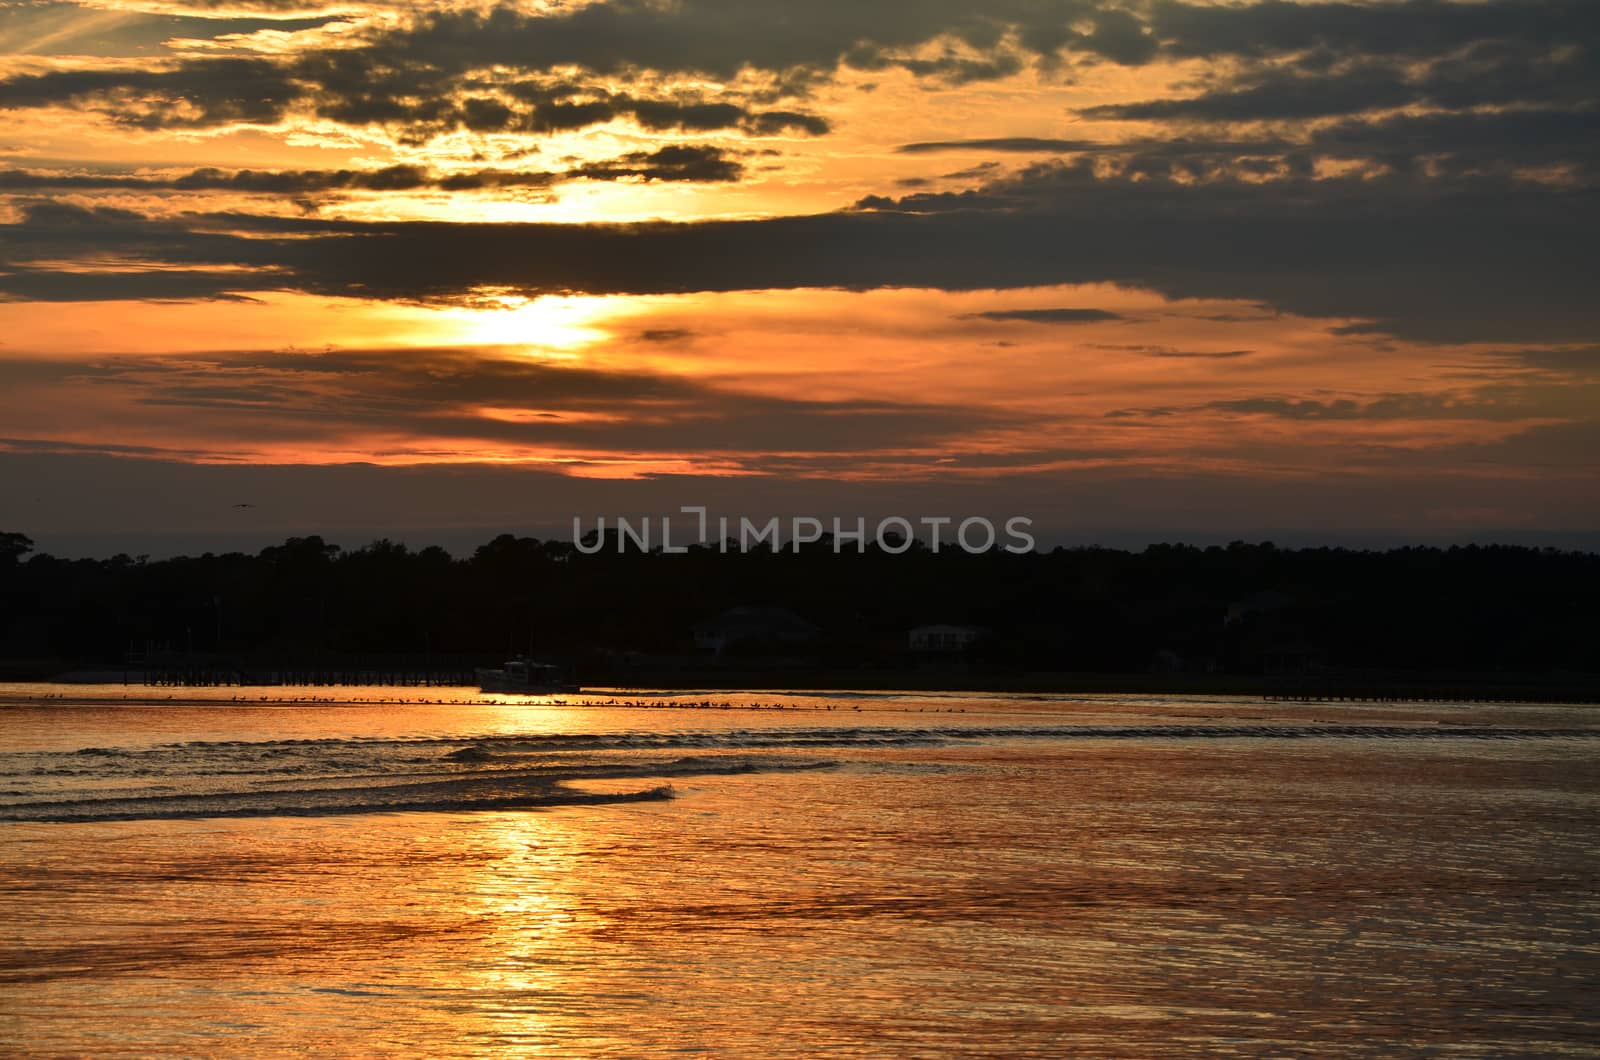 The sun setting over the intercoastal waterway in North Carolina